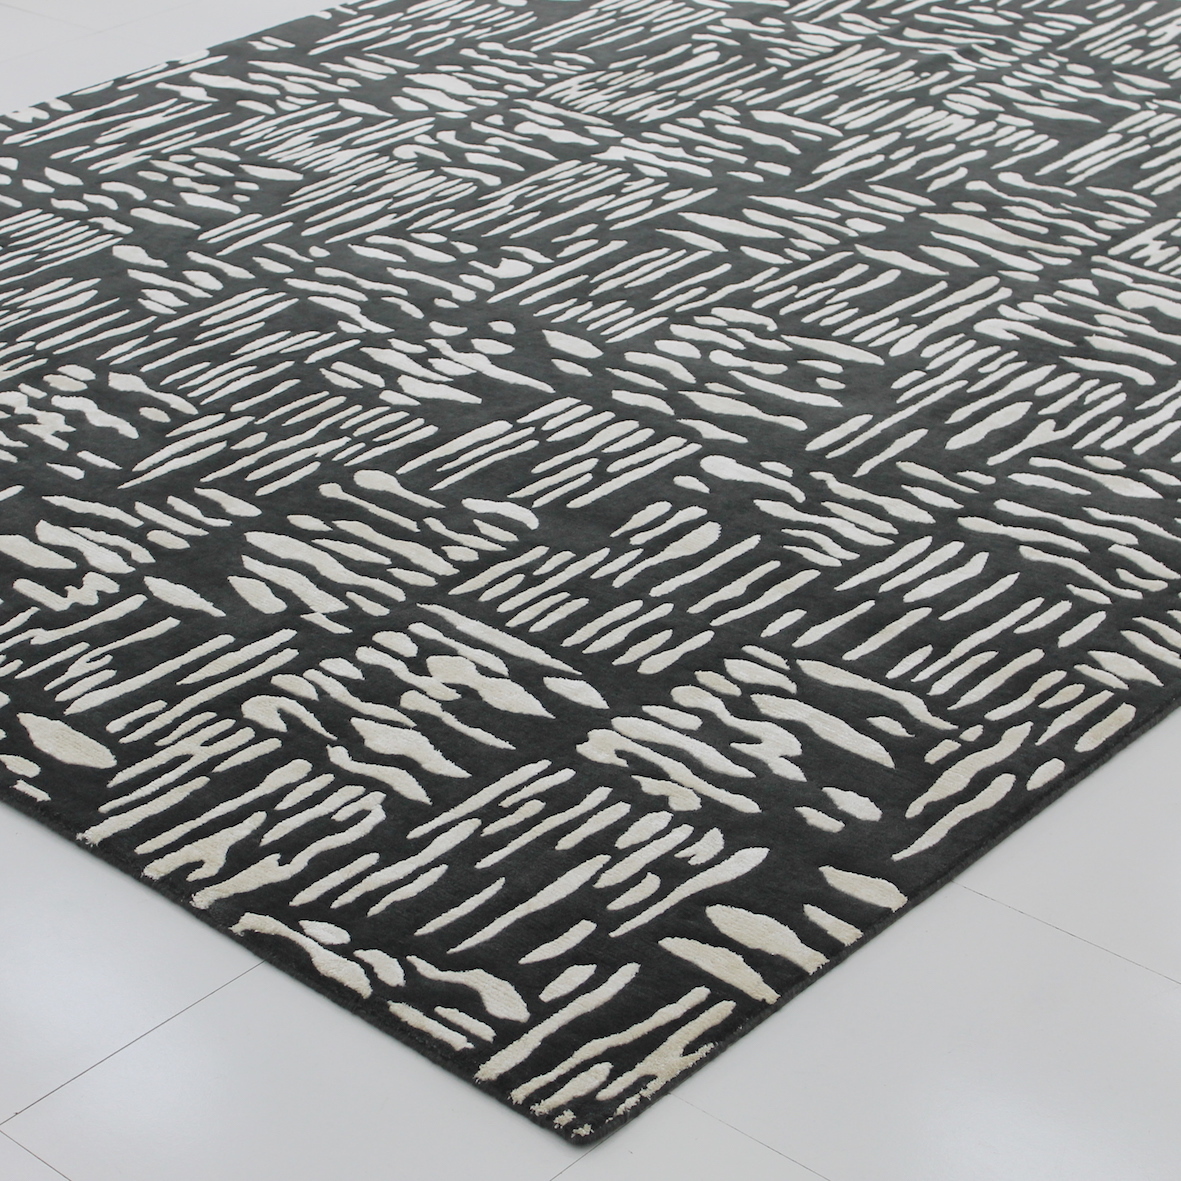 Black and white rug